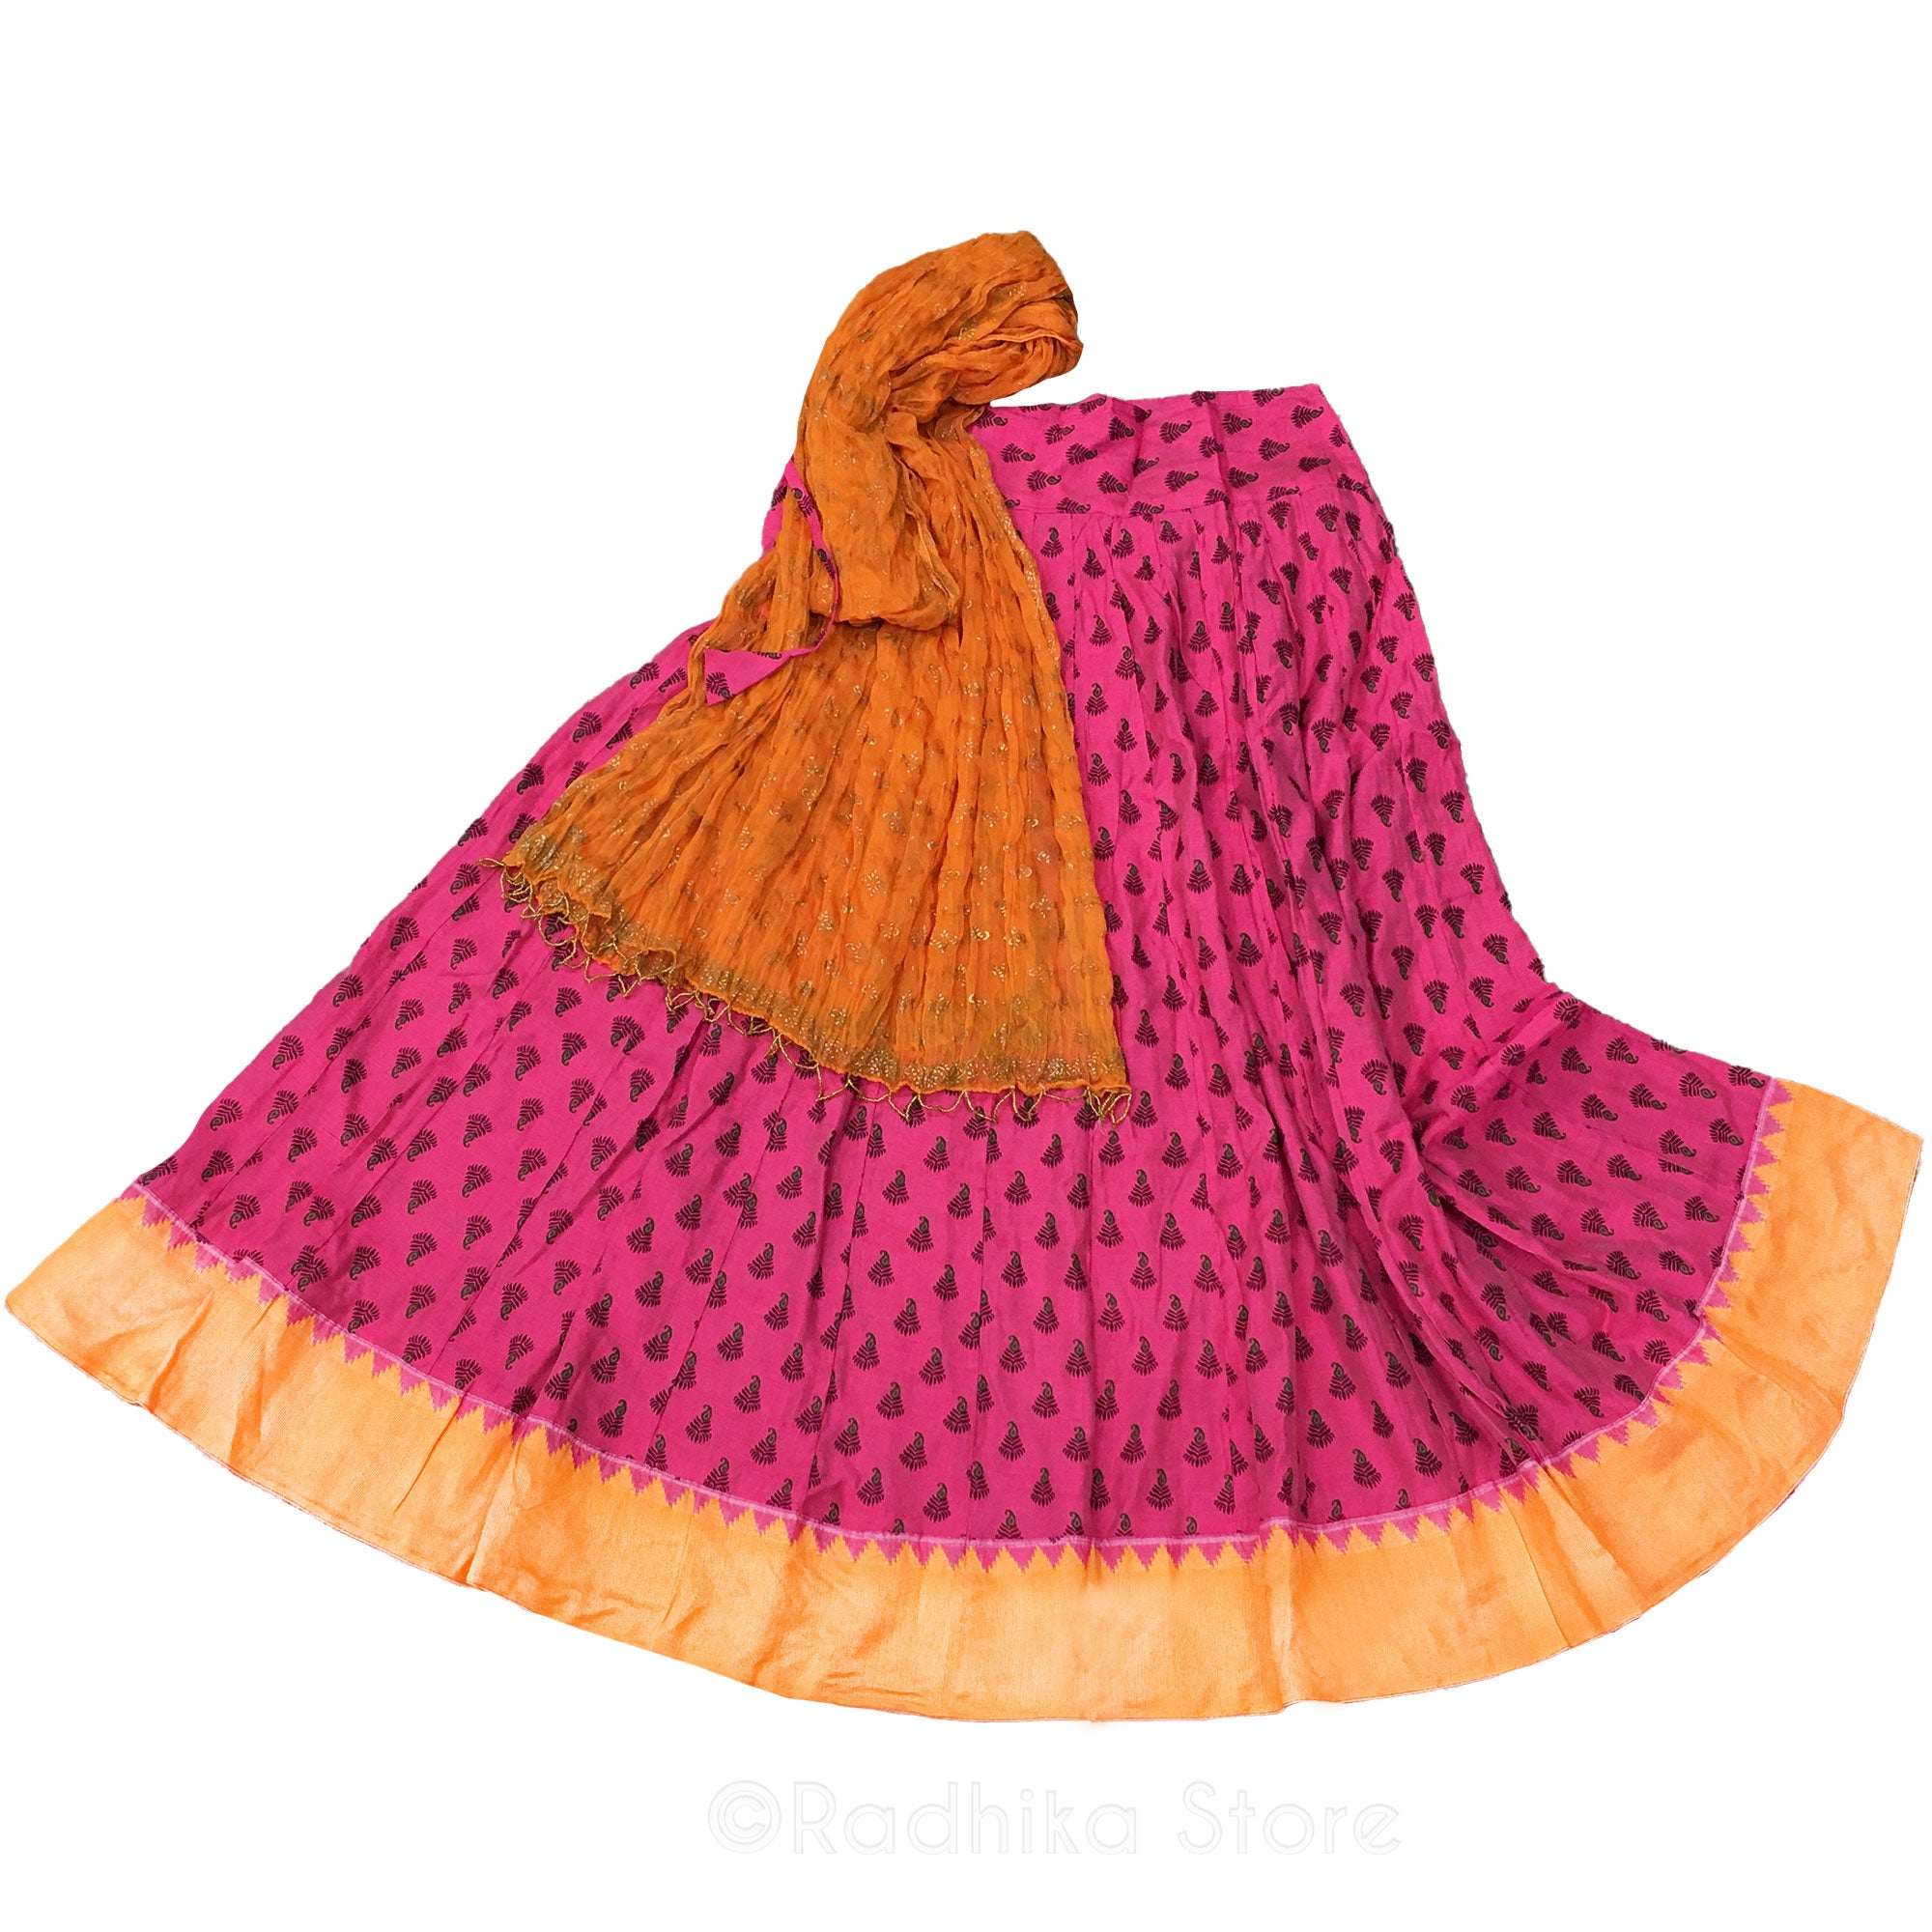 Gopi Skirt - Radhika Peacock Chandrika -  Bright Pink and light Peack -With Orange Chadar- S or M